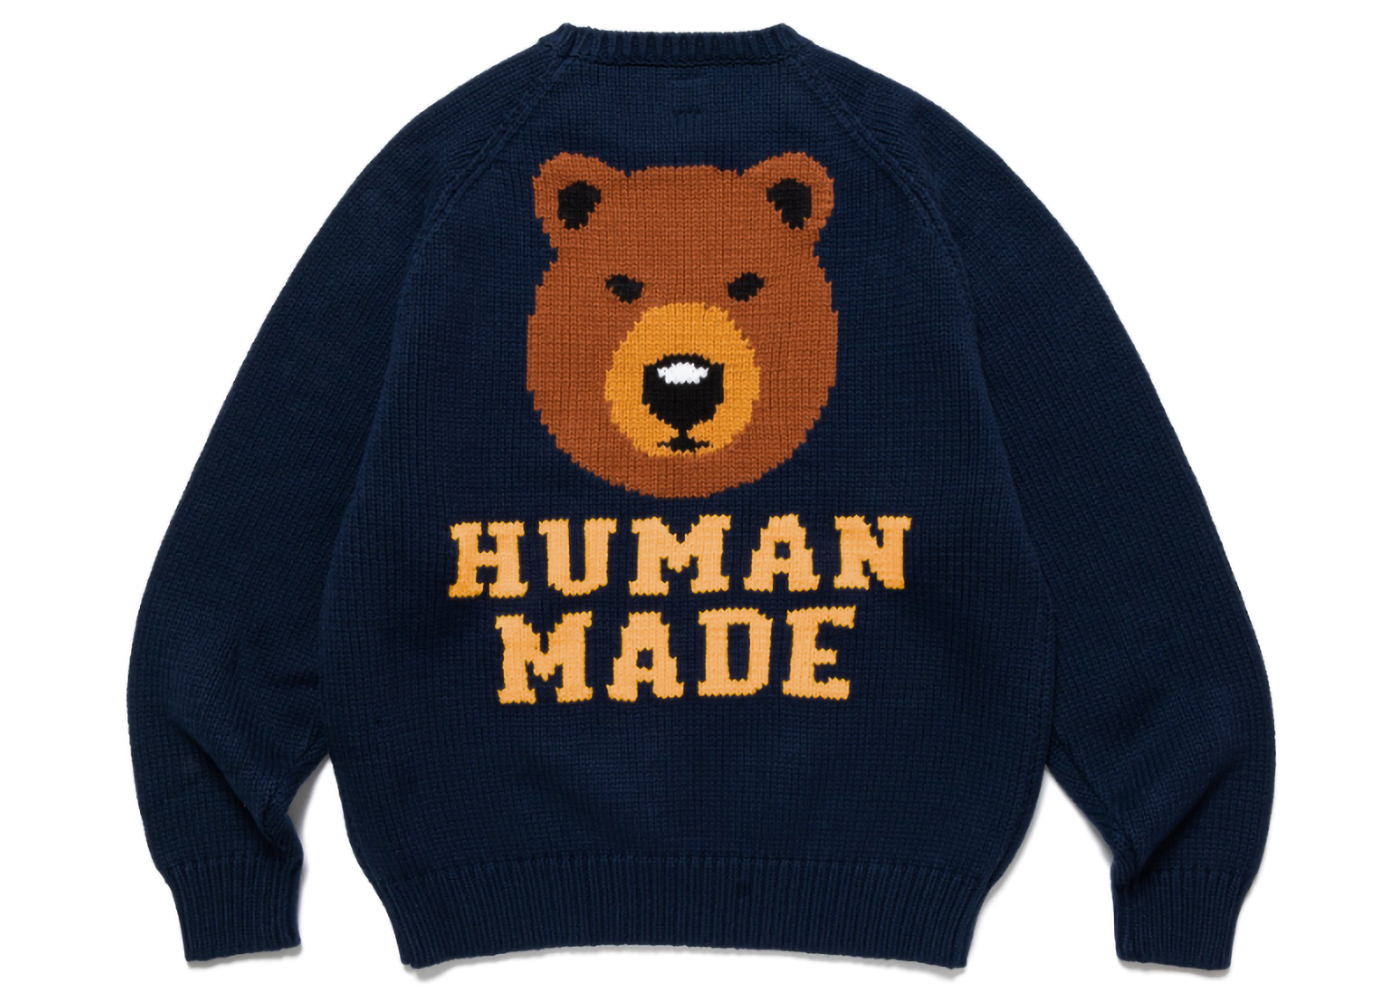 HUMAN MADE BEAR RAGLAN KNIT SWEATER - ニット/セーター